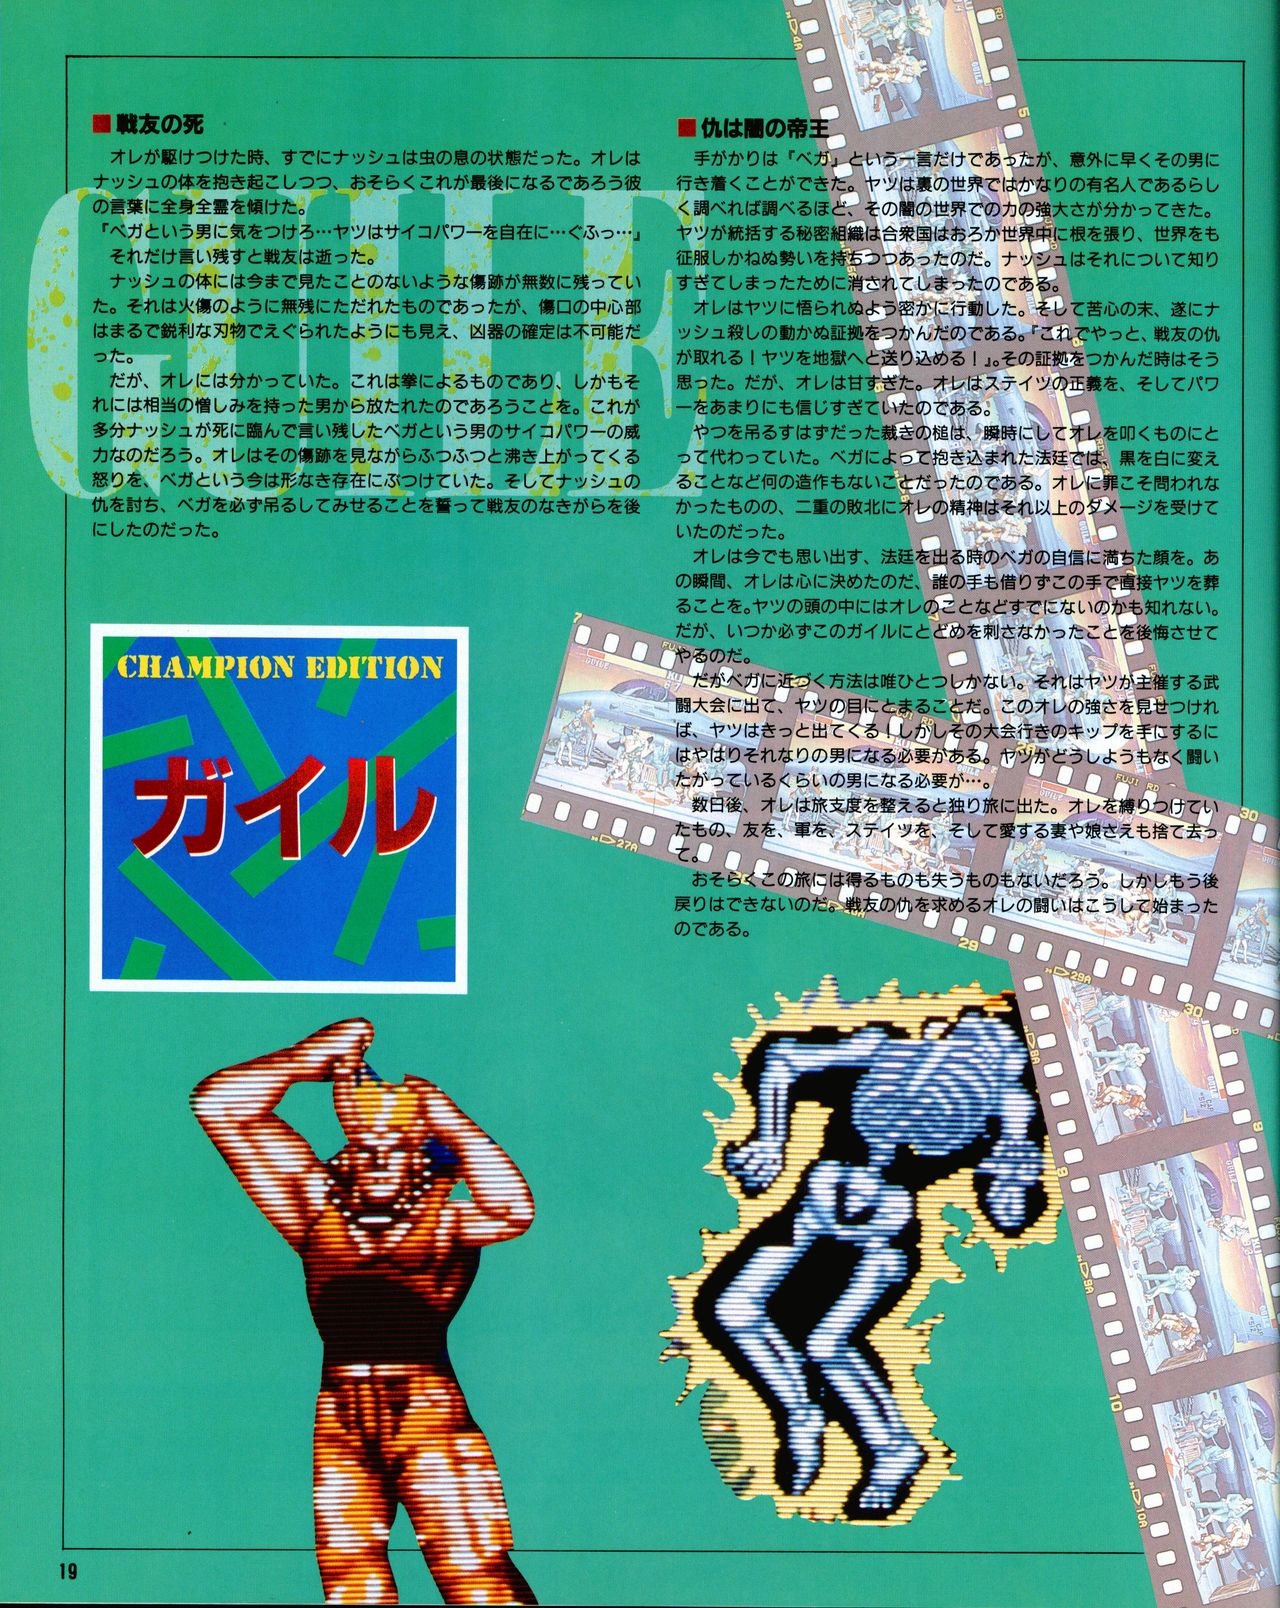 Street Fighter II Dash - Gamest special issue 77 20